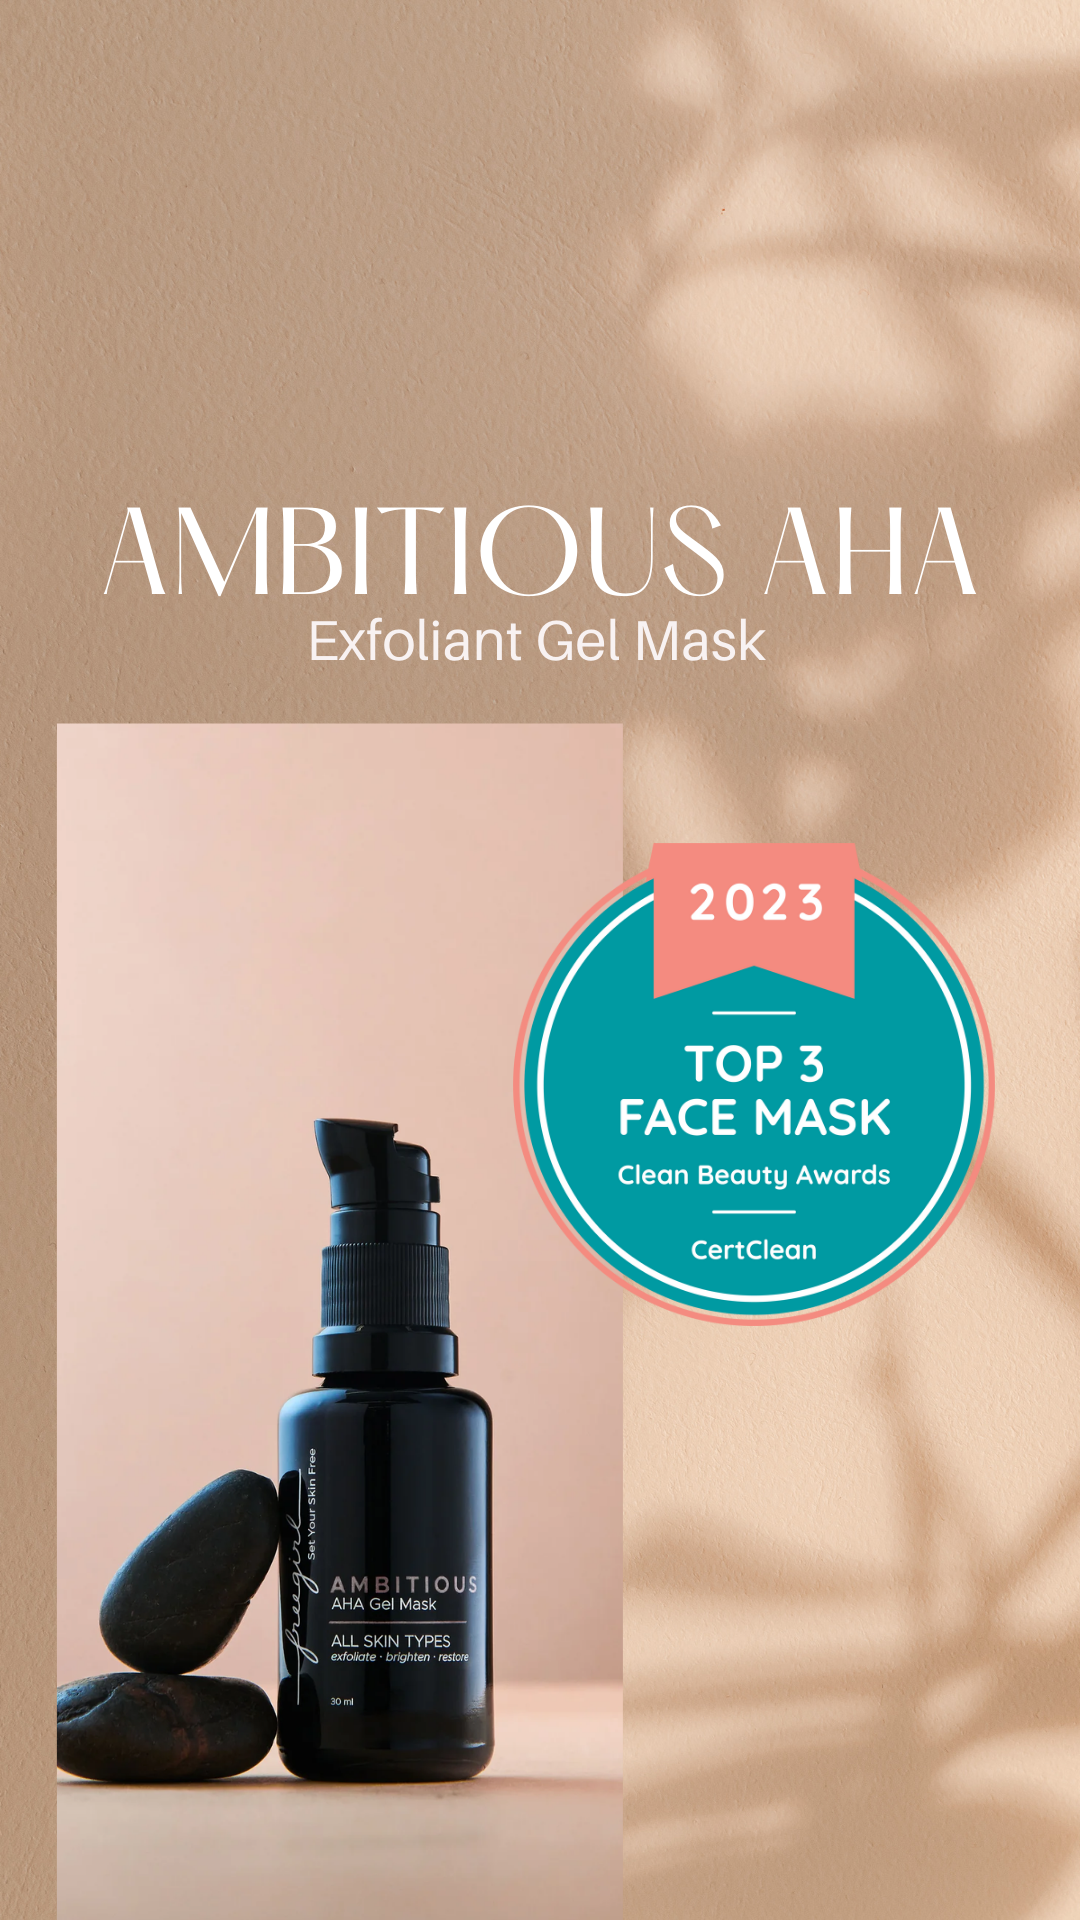 Ambitious AHA Exfoliant Gel Mask